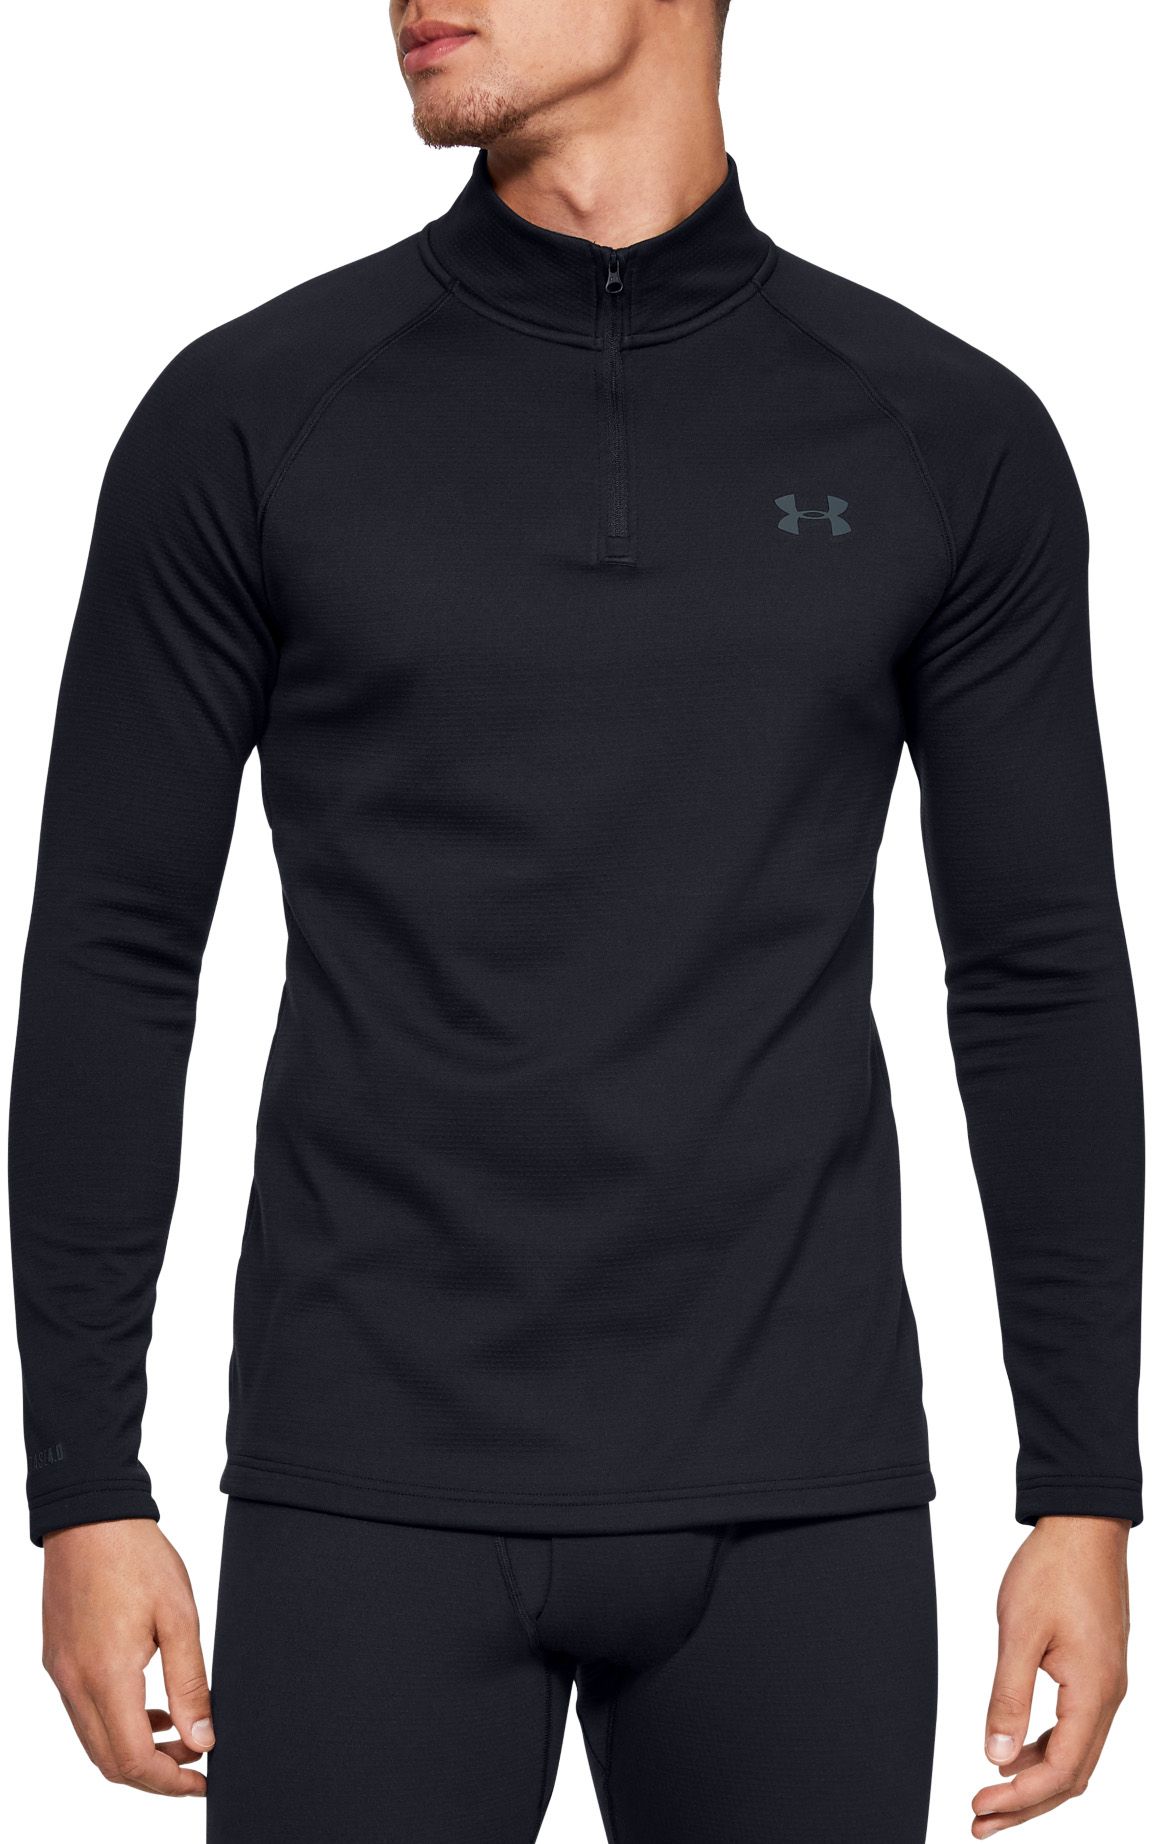 New Under Armour Boys' Threadborne ¼ Zip Sweater Shirt MSRP $35.00 Black Blue 